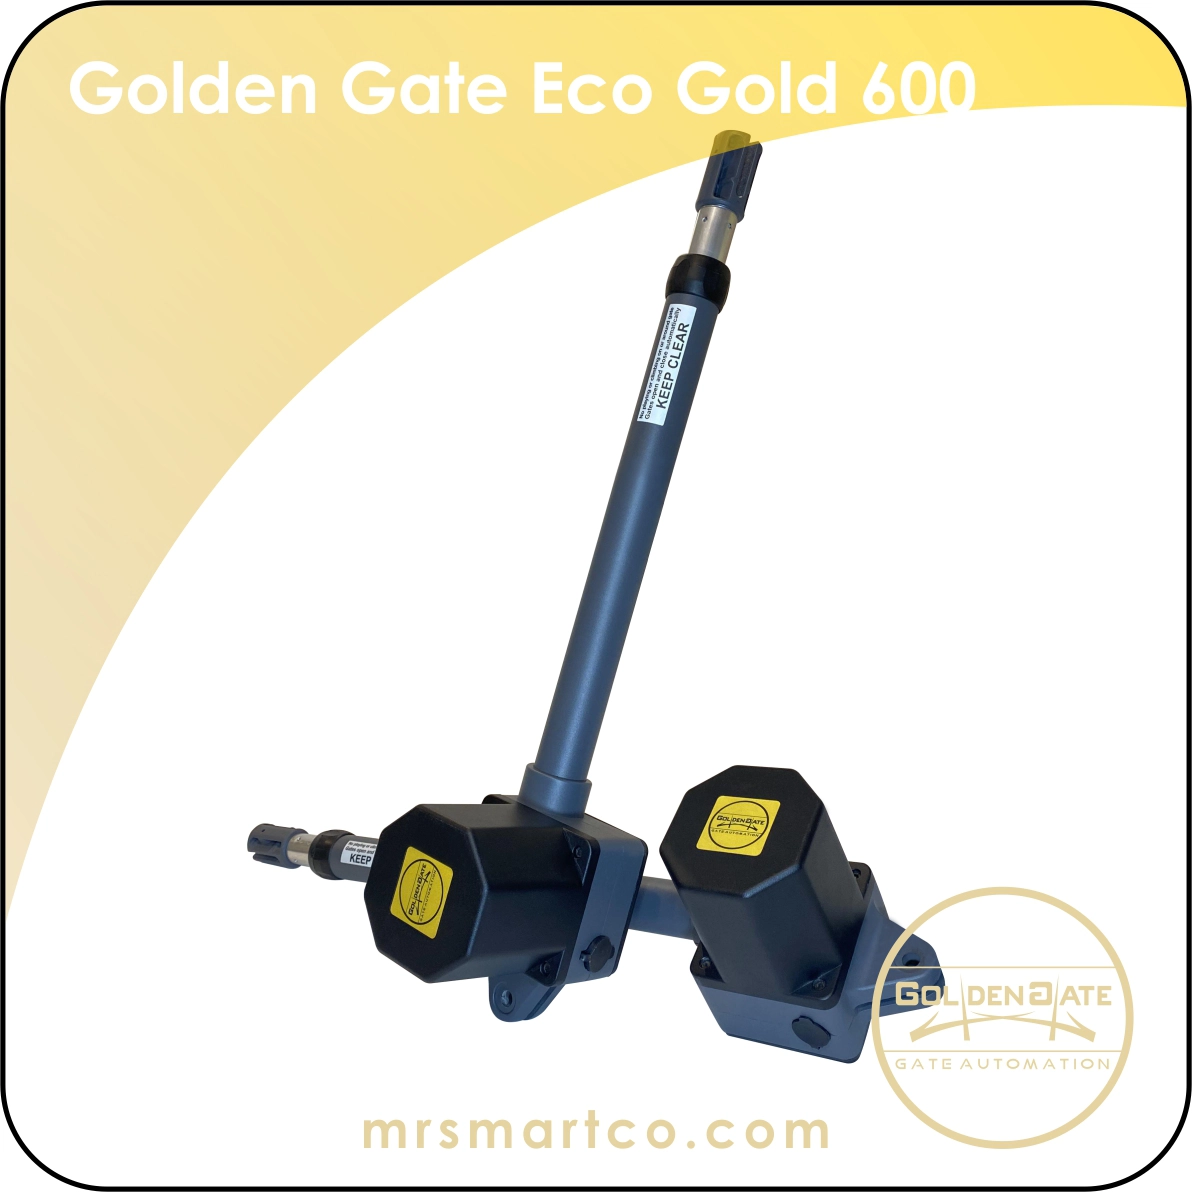 Golden Gate Eco Gold600